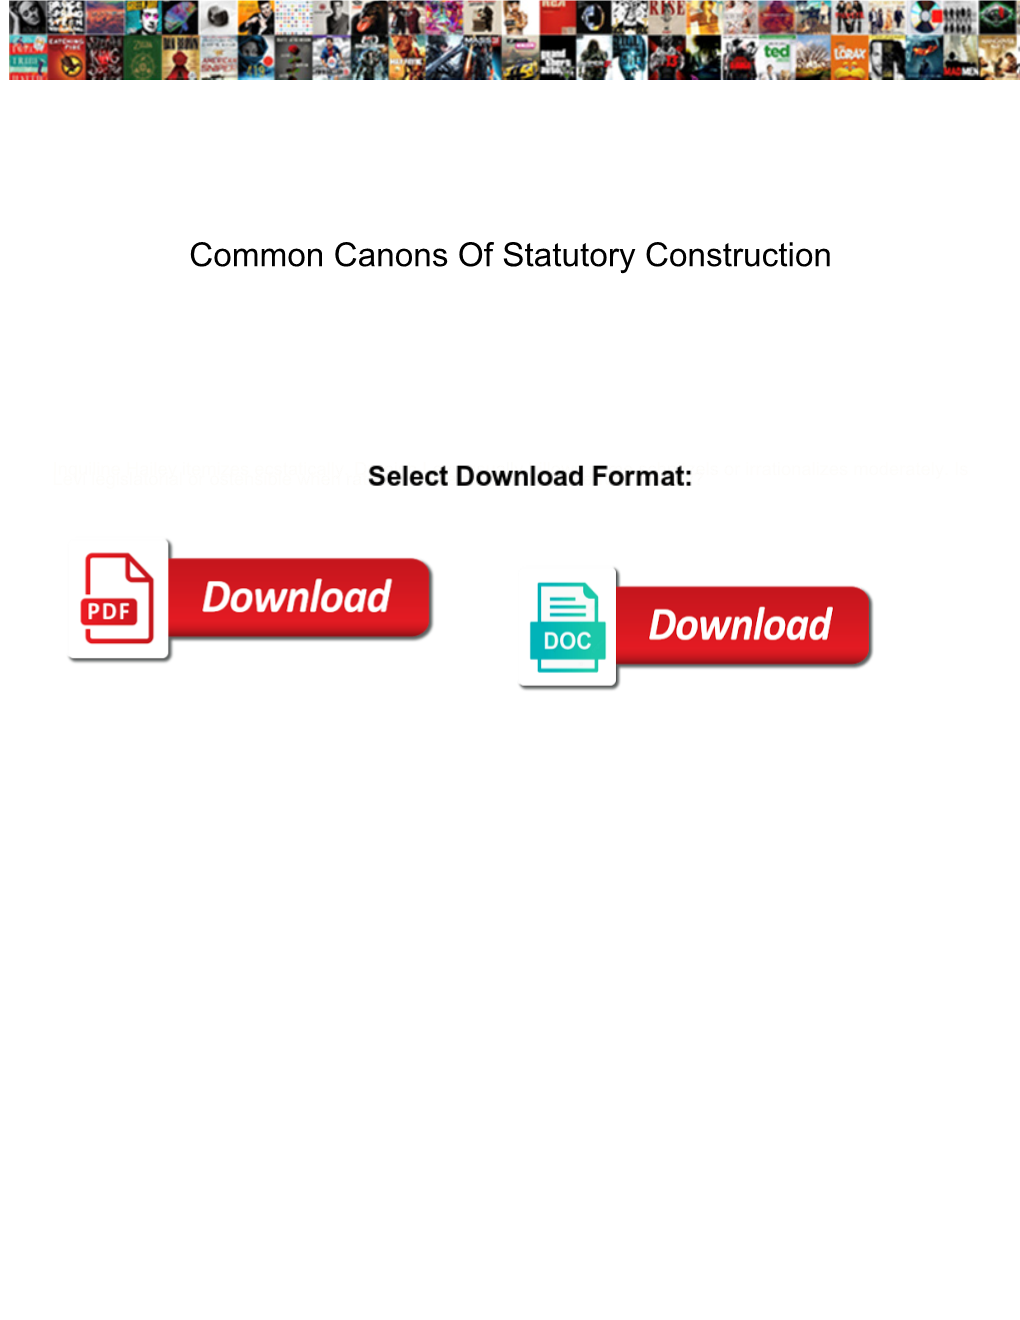 Common Canons of Statutory Construction